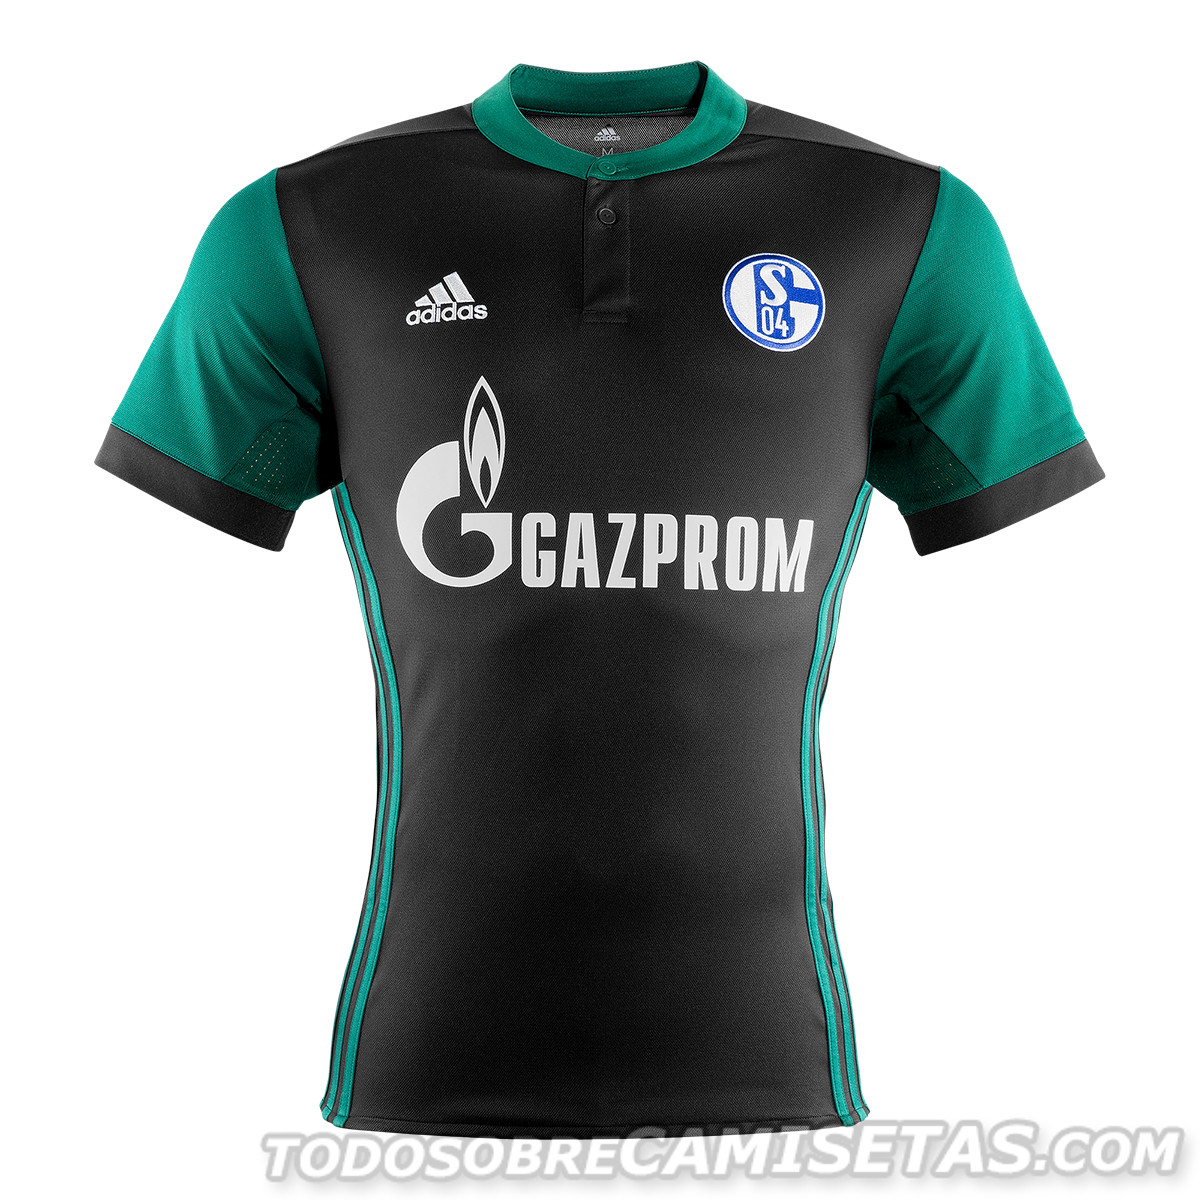 FC Schalke 04 adidas 2017-18 Third Kit